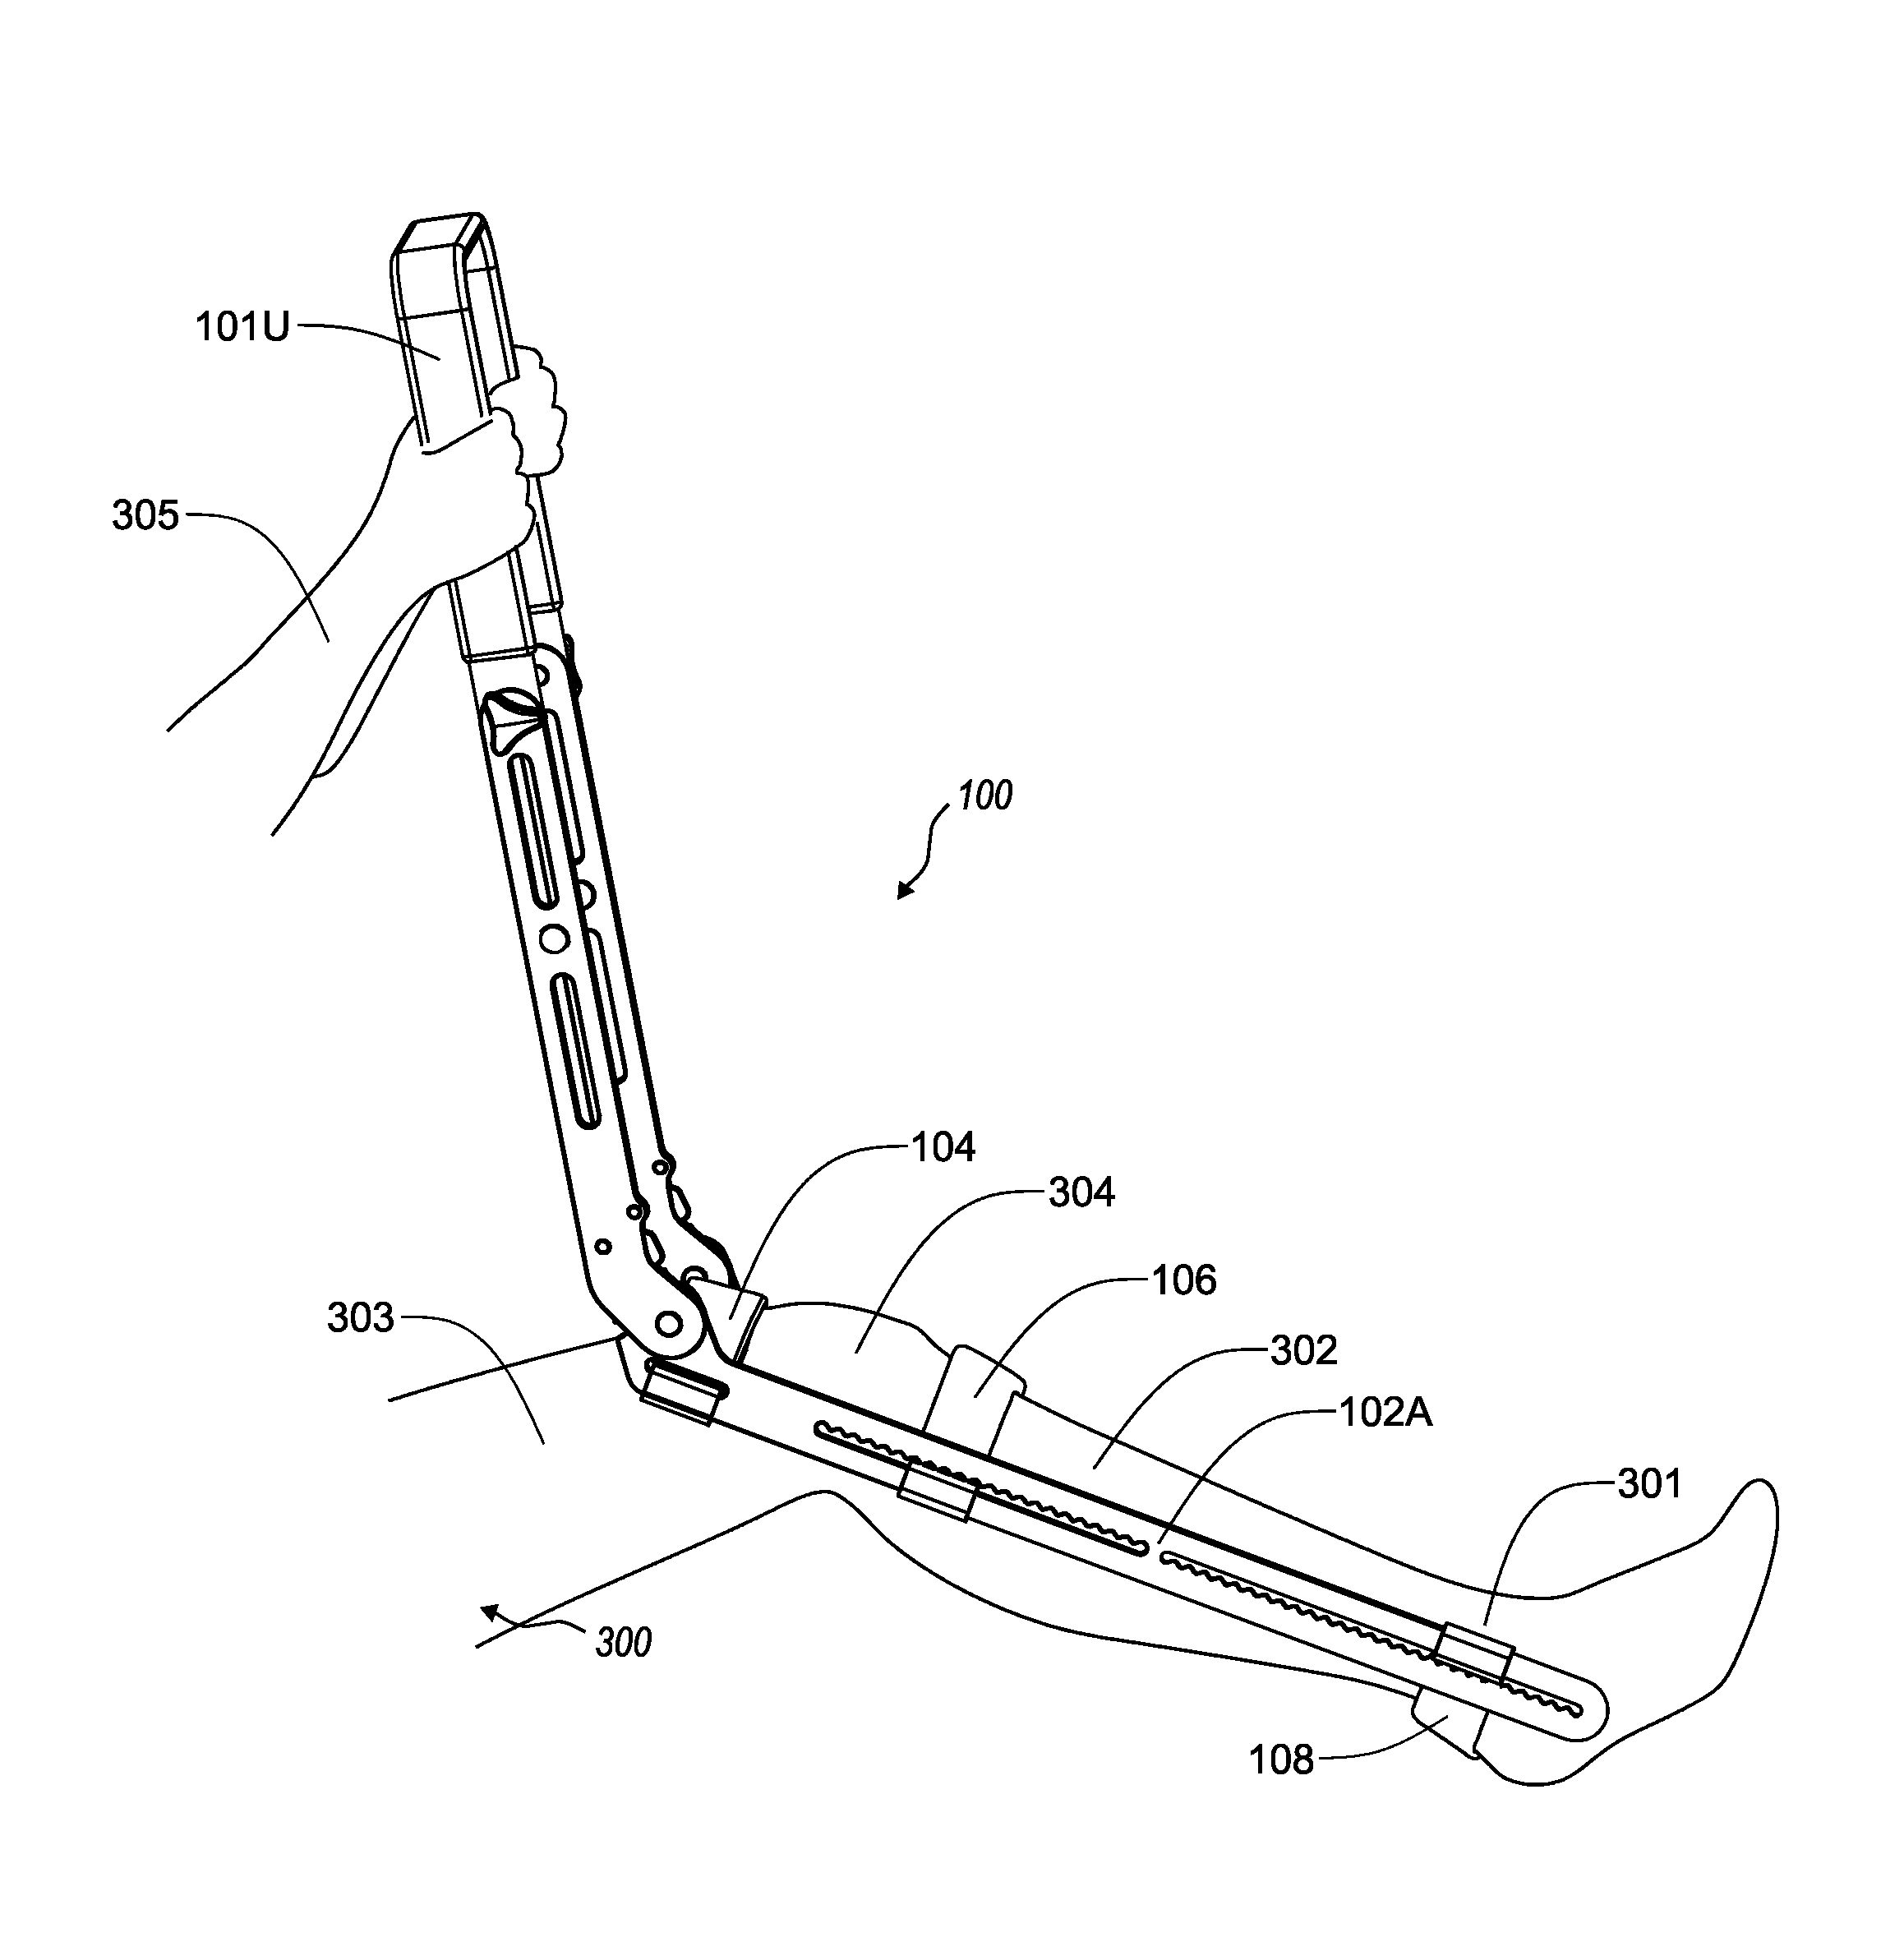 Knee rehabilitation device with measurement element